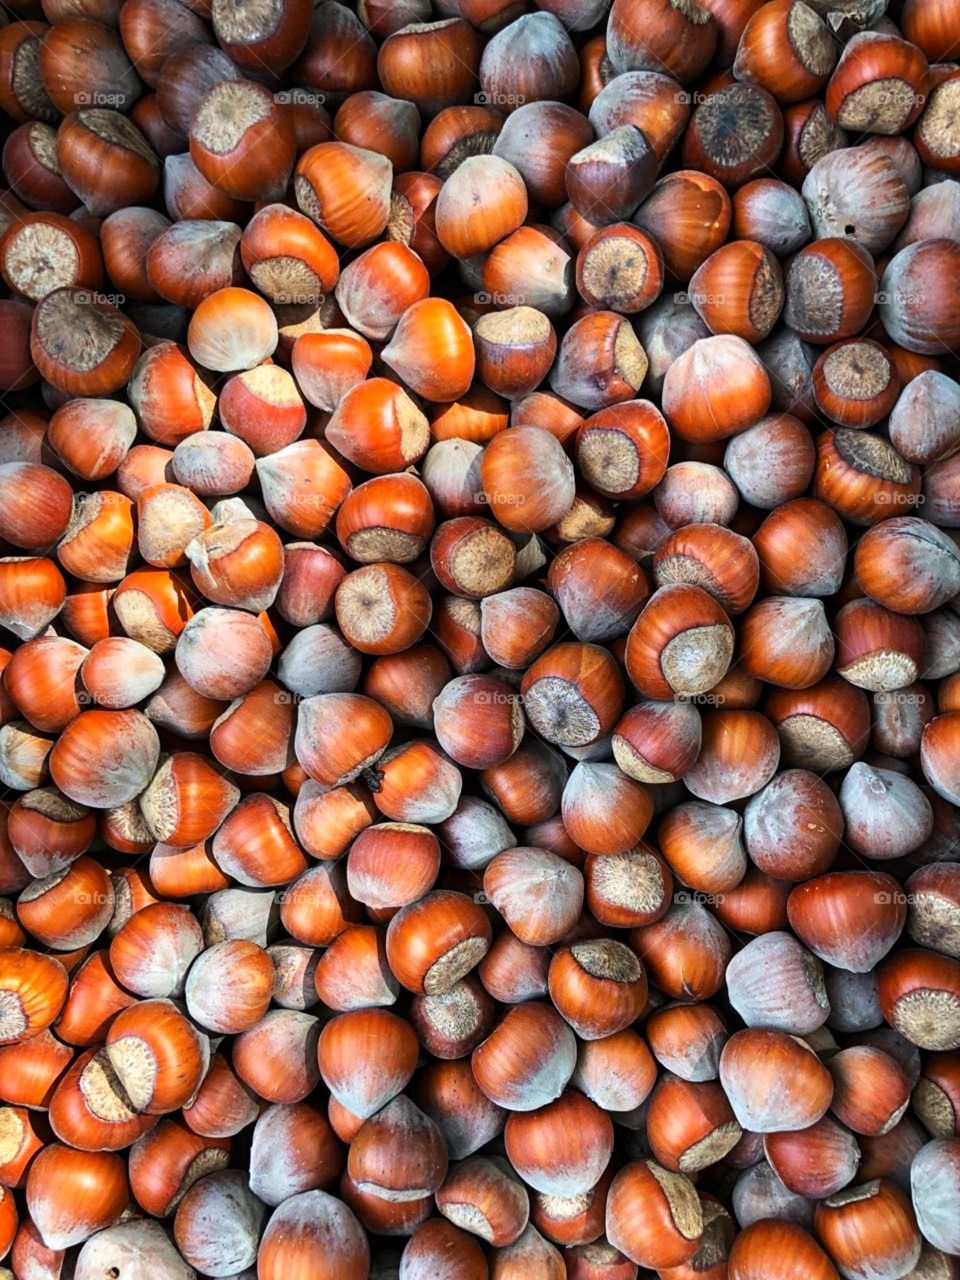 Shelling Nut